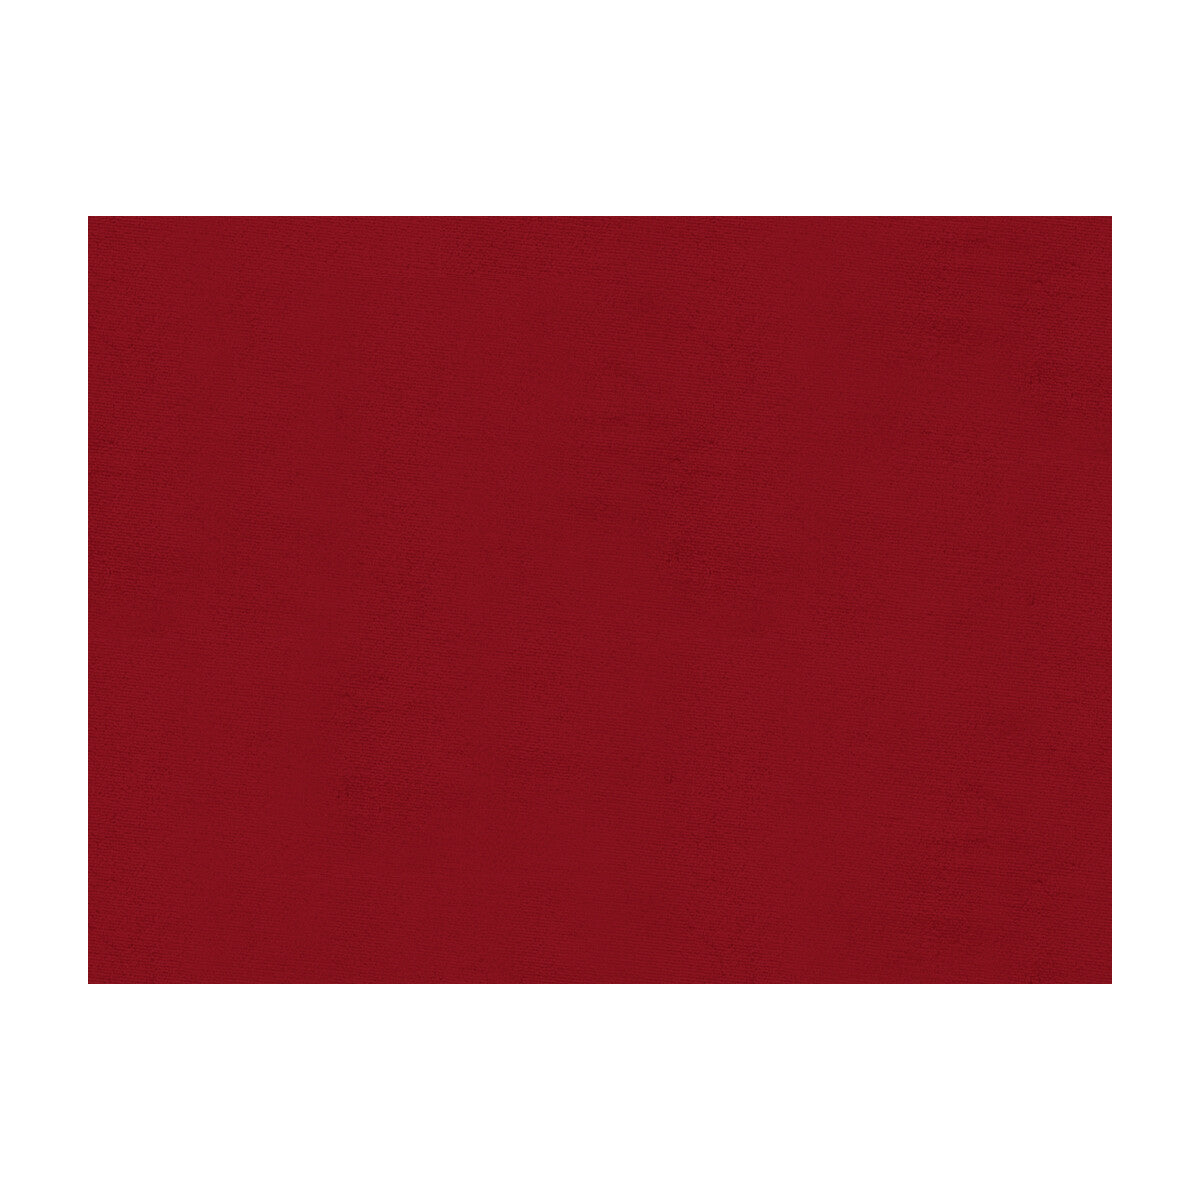 Windsor fabric in burgindy color - pattern NF-WINDSOR.54.0 - by Lee Jofa